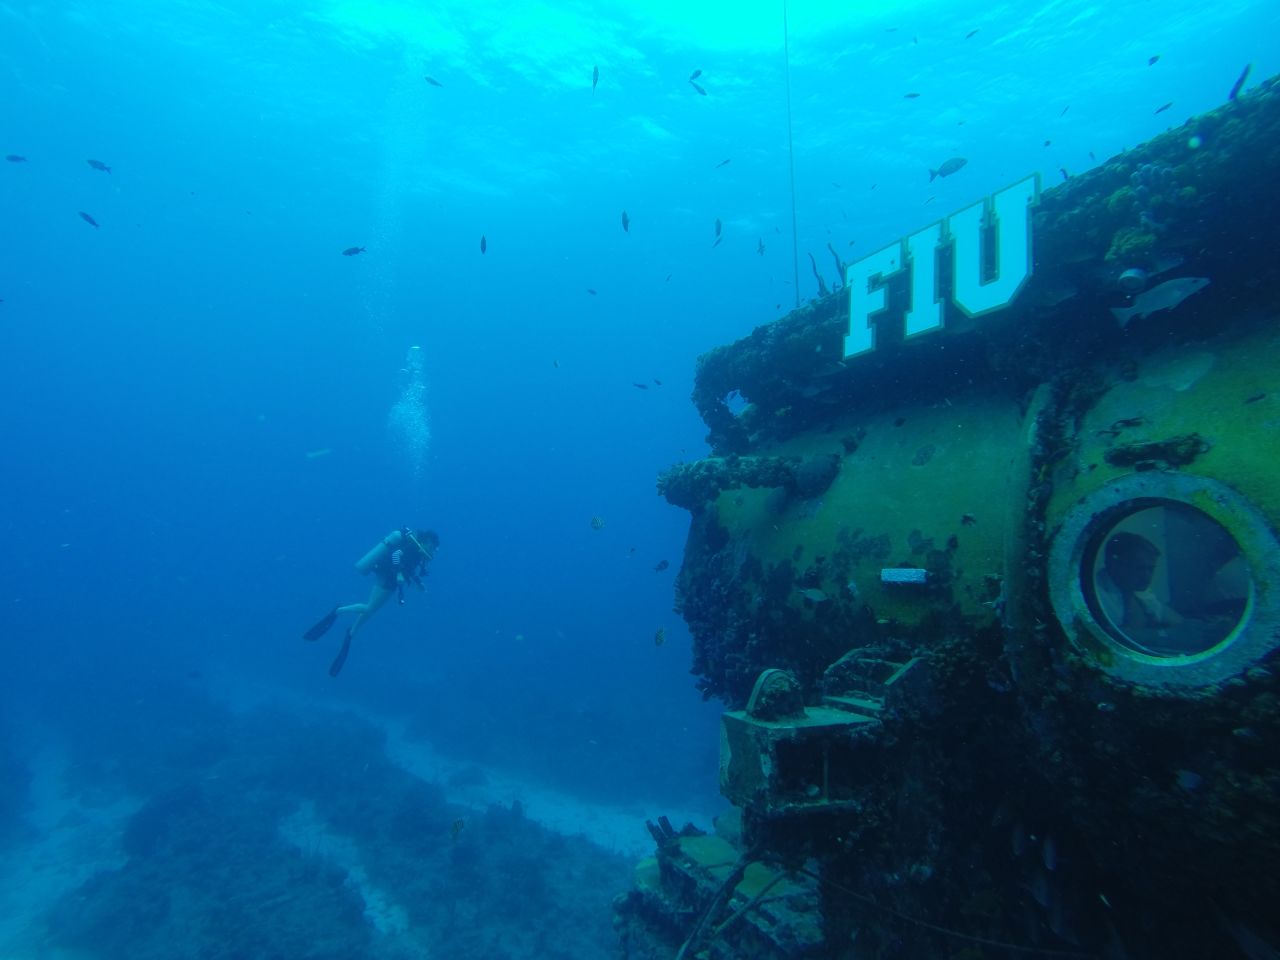 Aquarius, operated by Florida International University, calls itself the world's only underwater marine laboratory.